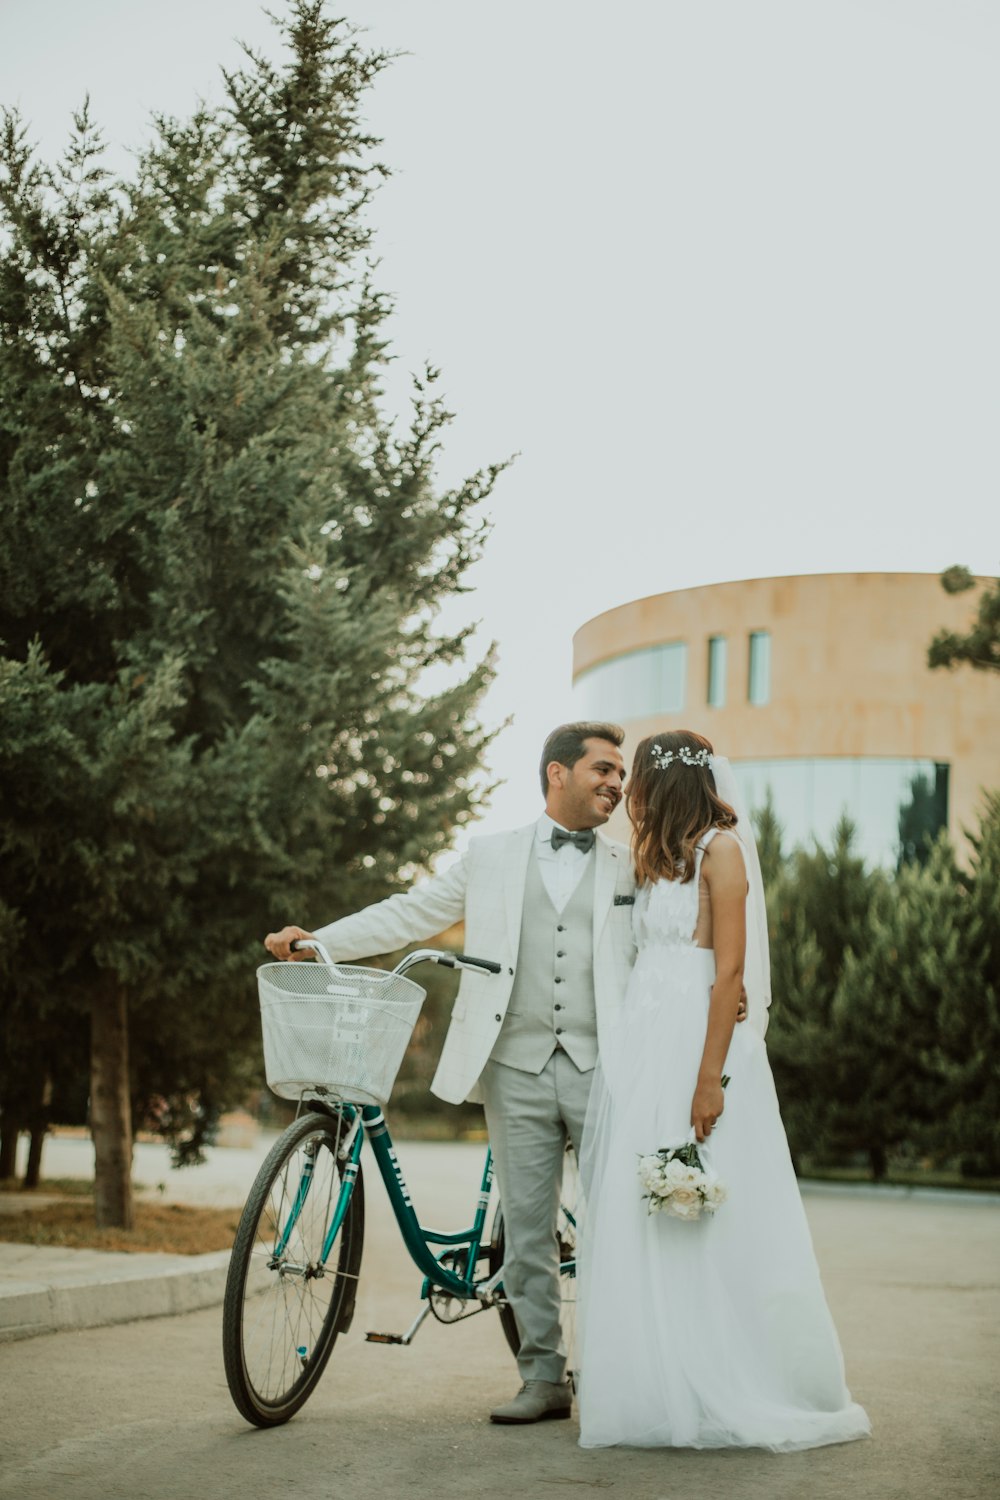 man and woman wearing wedding dress beside bicycle near tree during daytime